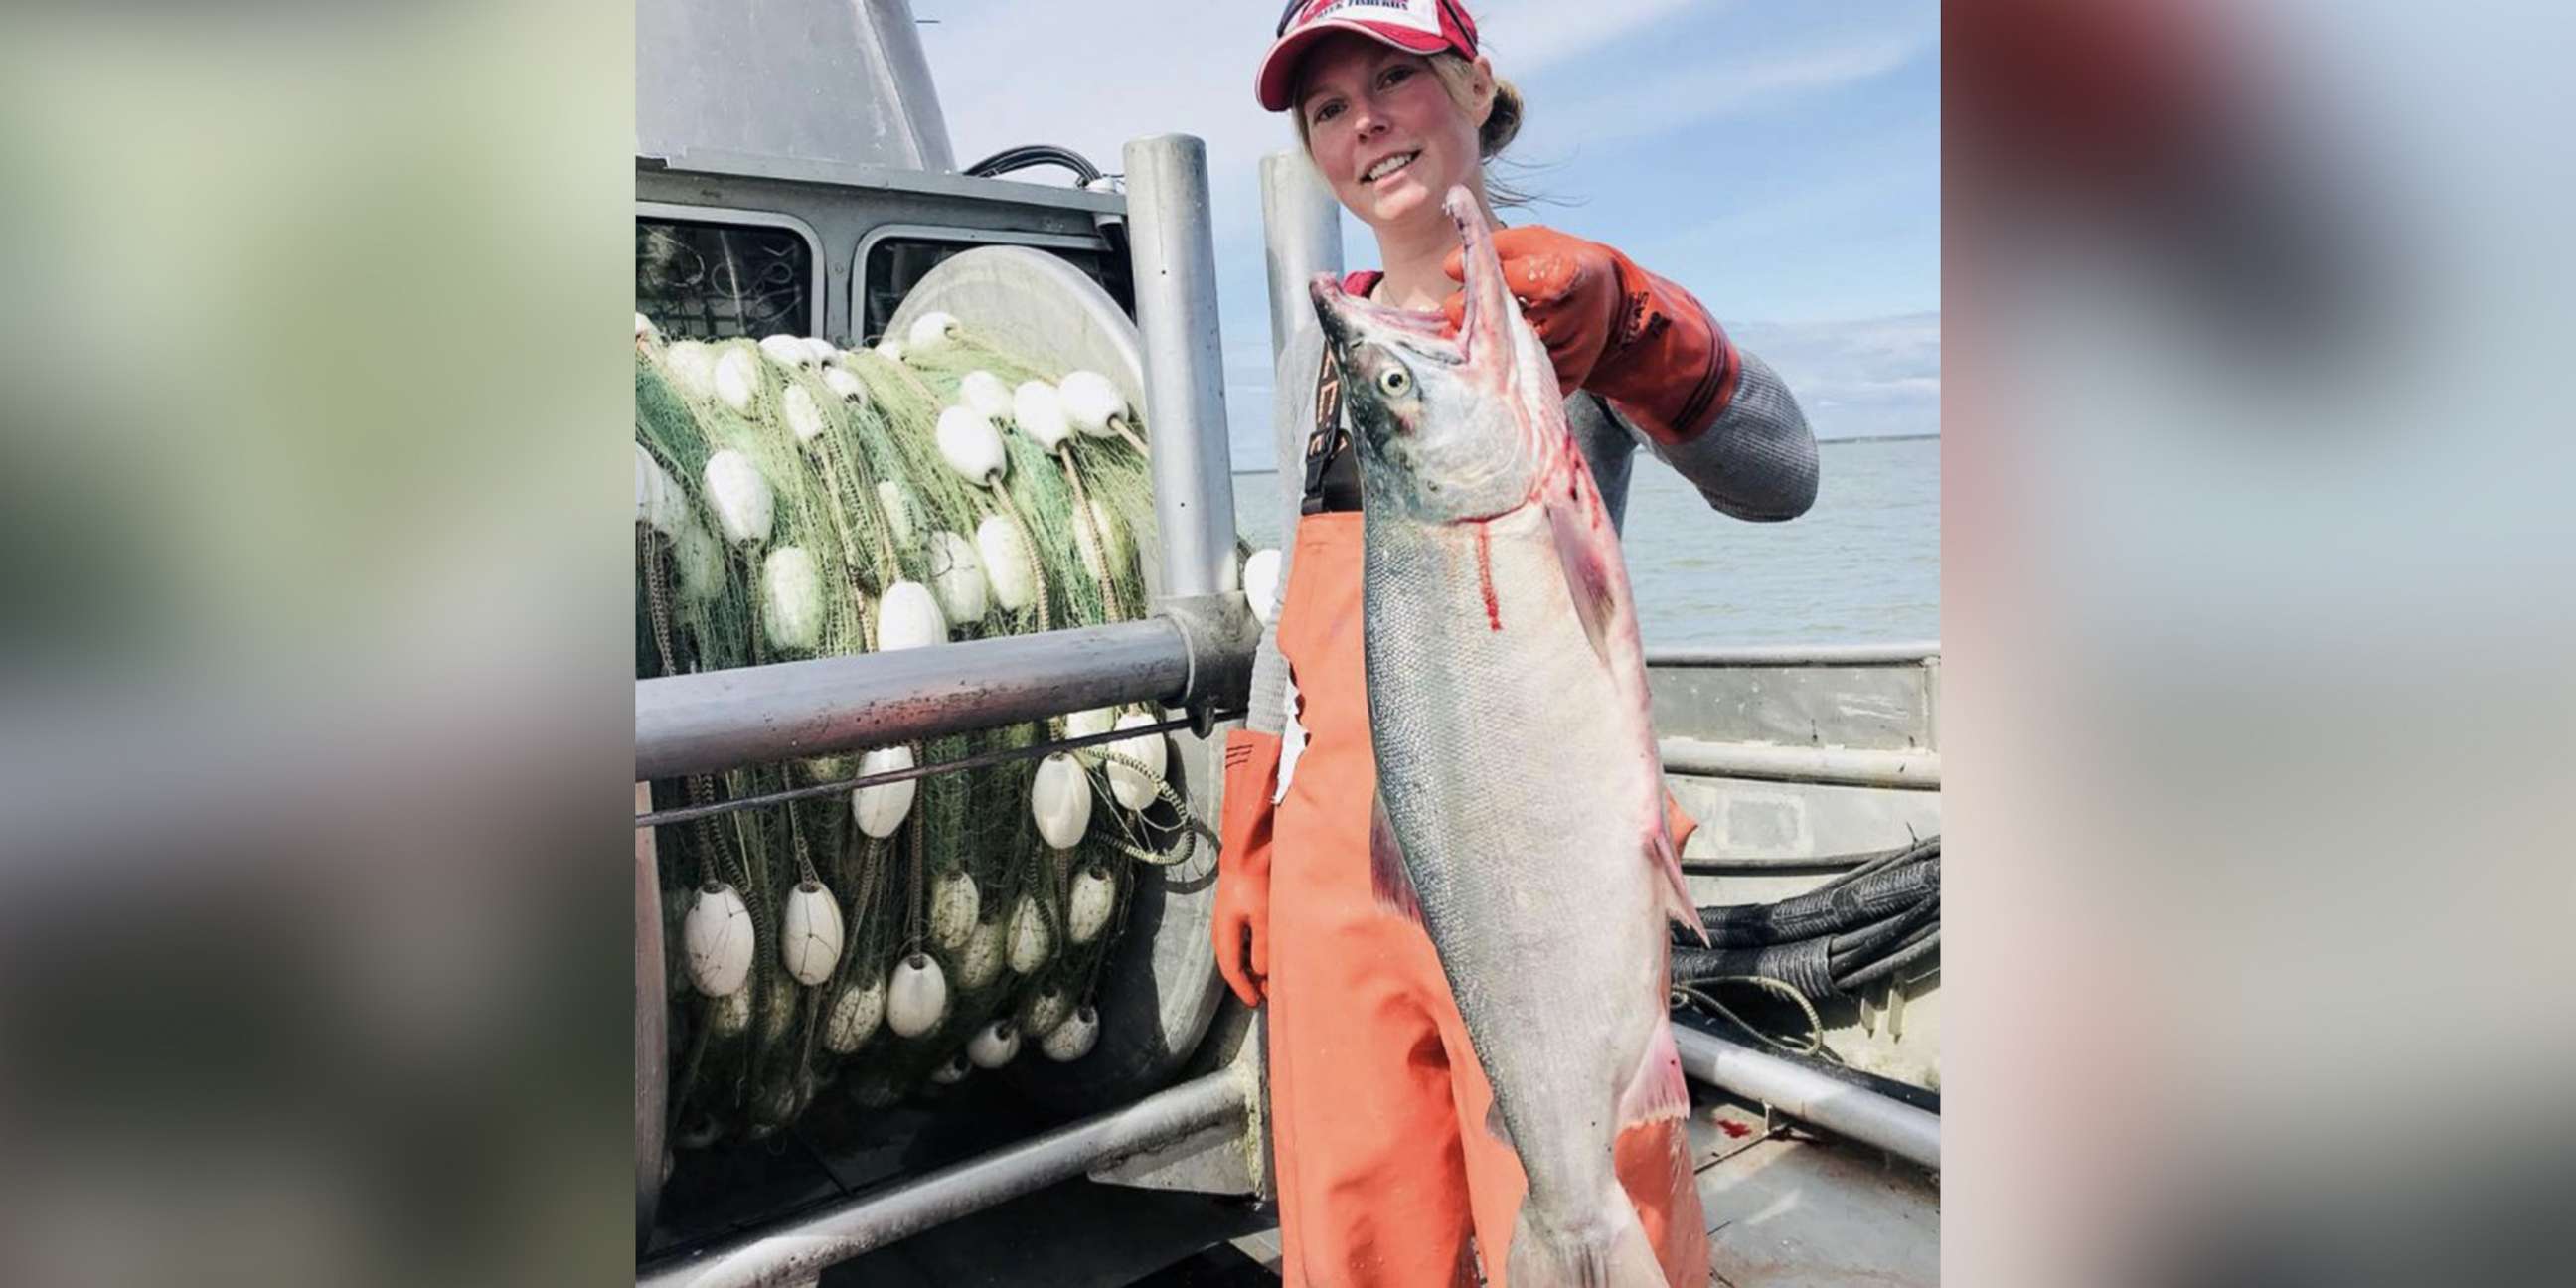 PHOTO: Katherine Carscallen's livelihood depends on seasonal sockeye salmon fishing in Bristol Bay, Alaska, but she fears COVID-19 may cause history to repeat itself.